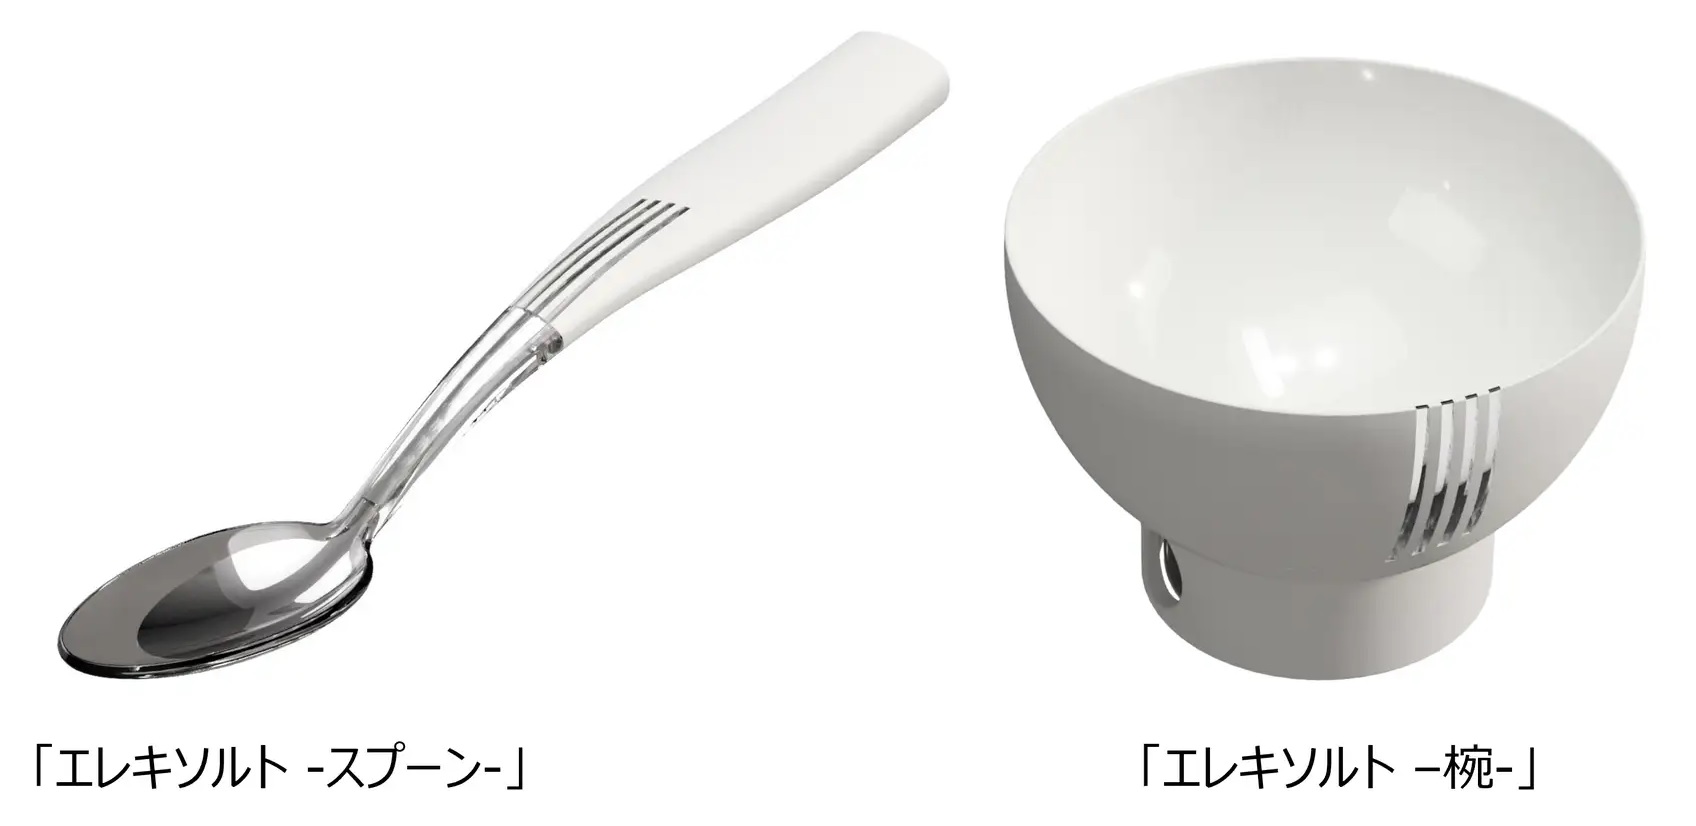 Kirin 'Electric-Salt' bowl zaps food to enhance flavor - Nikkei Asia